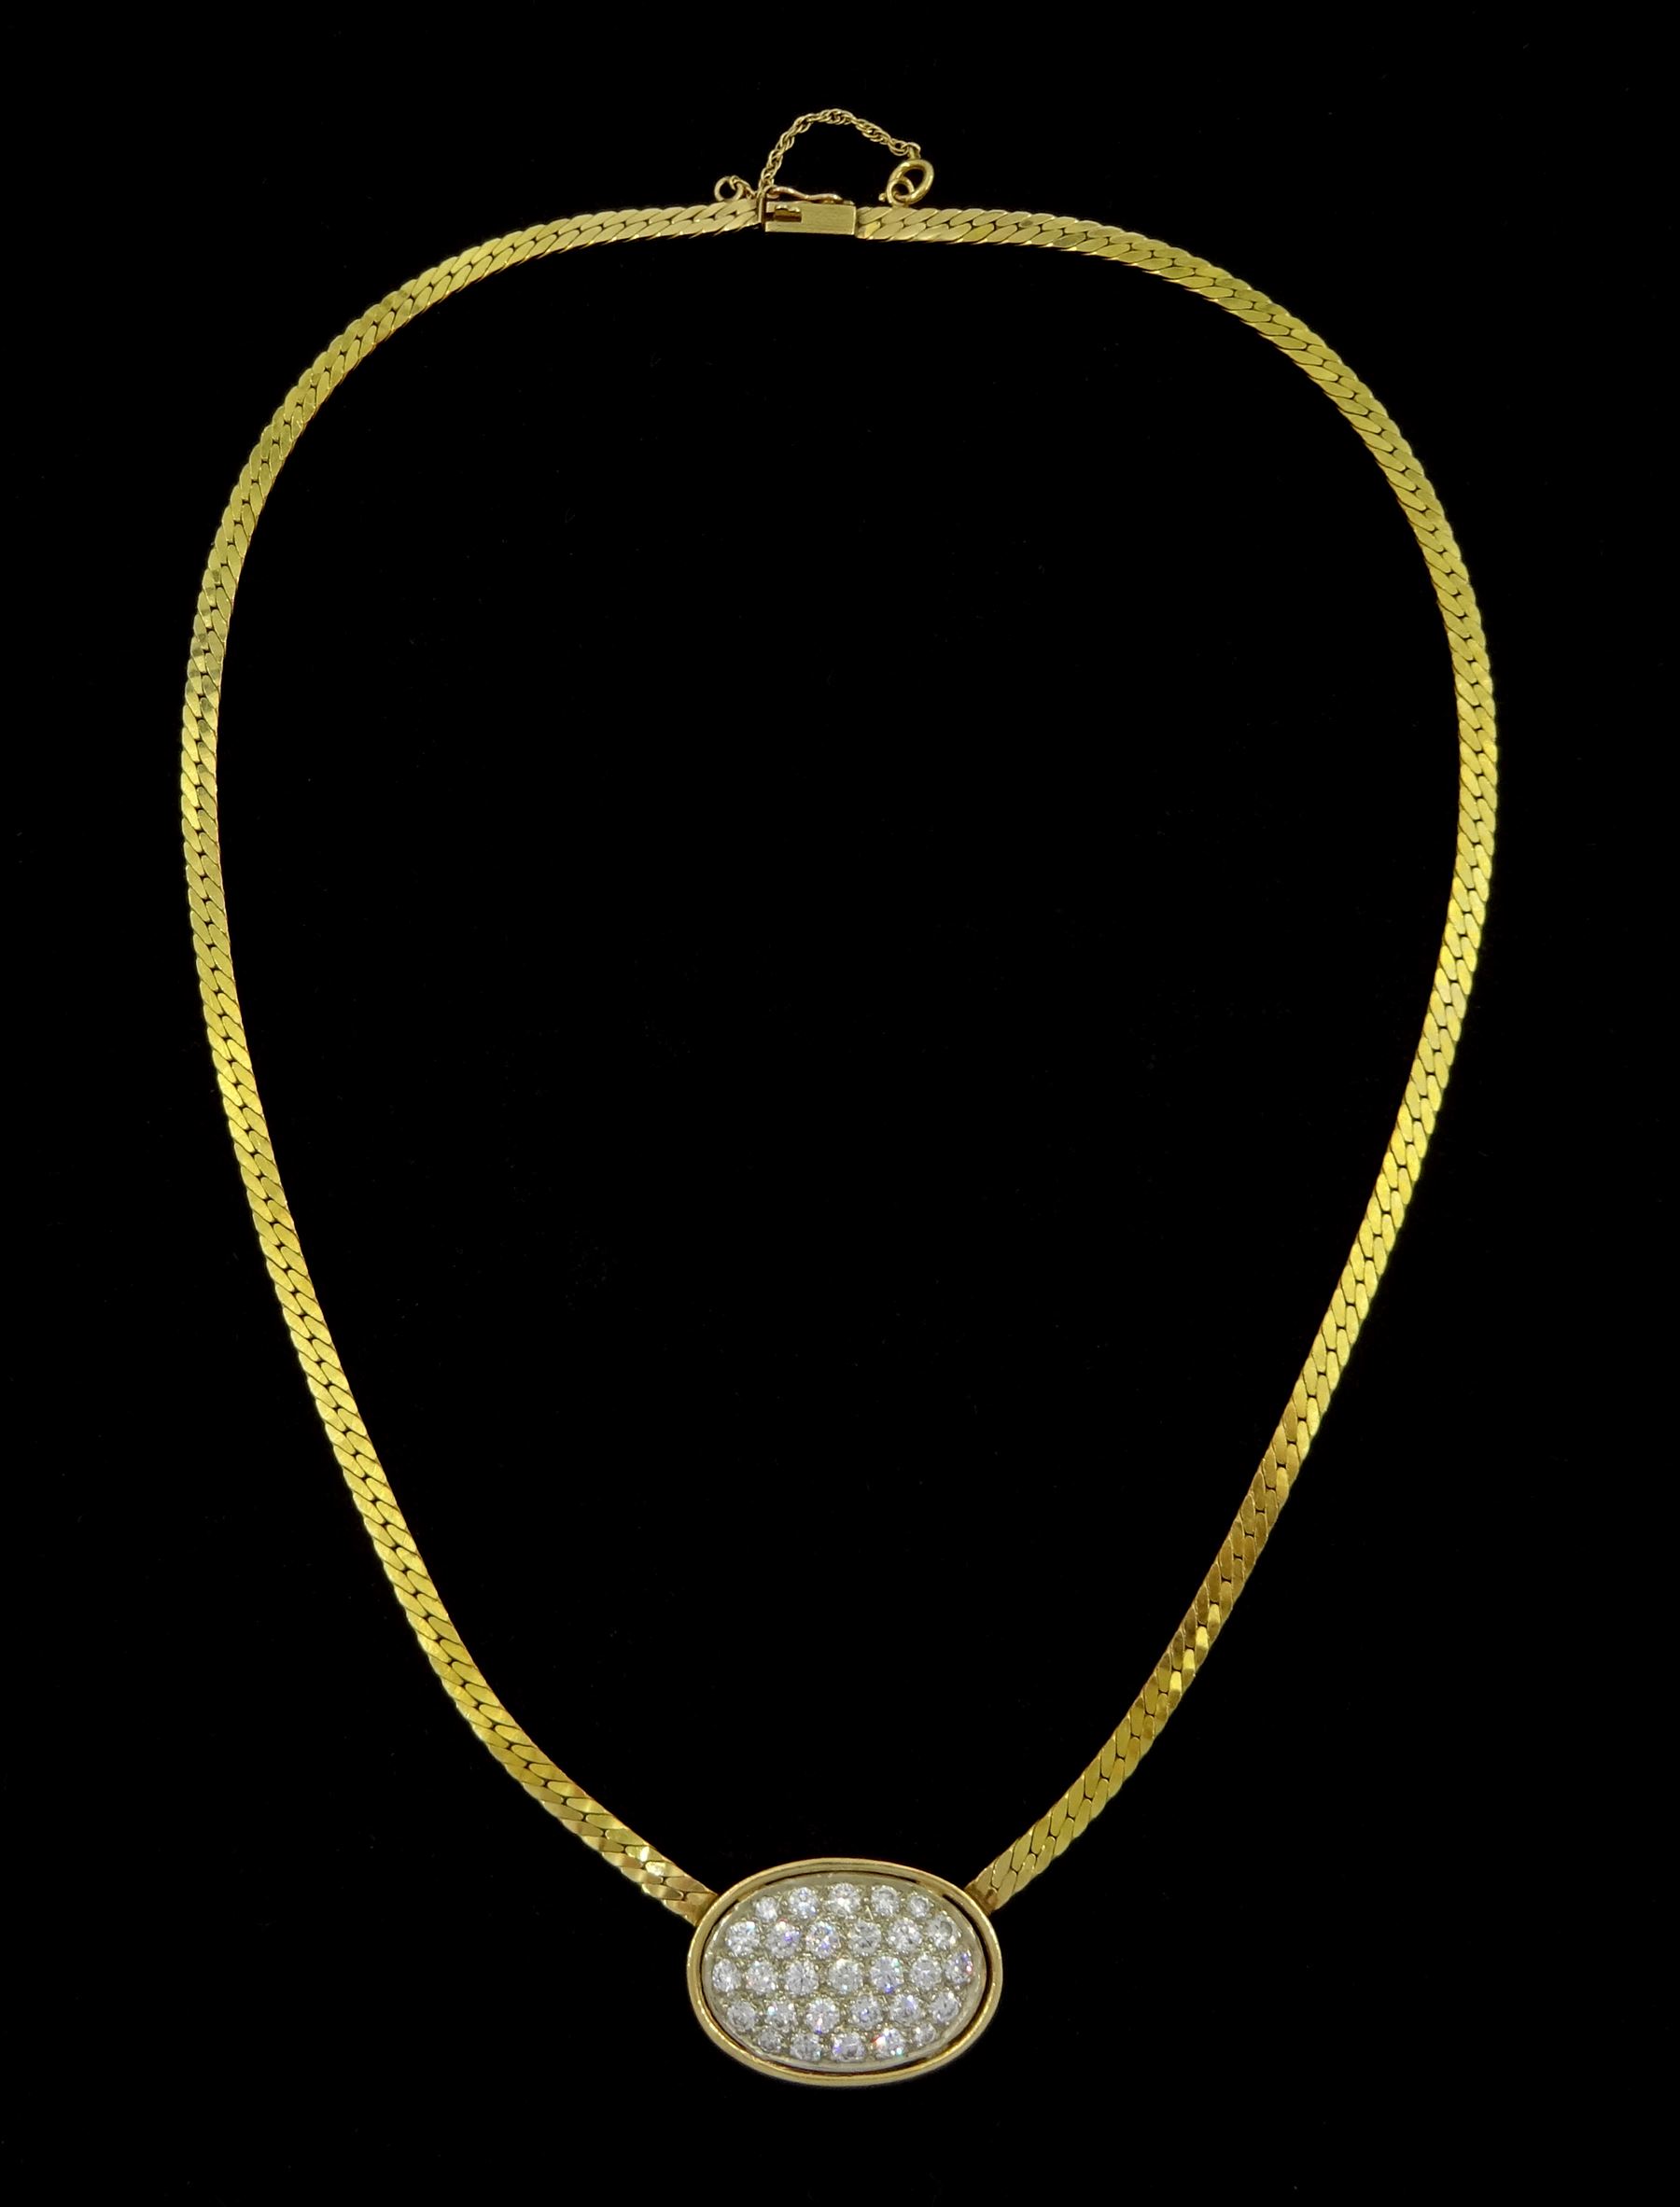 14ct gold pave set round brilliant cut diamond necklace